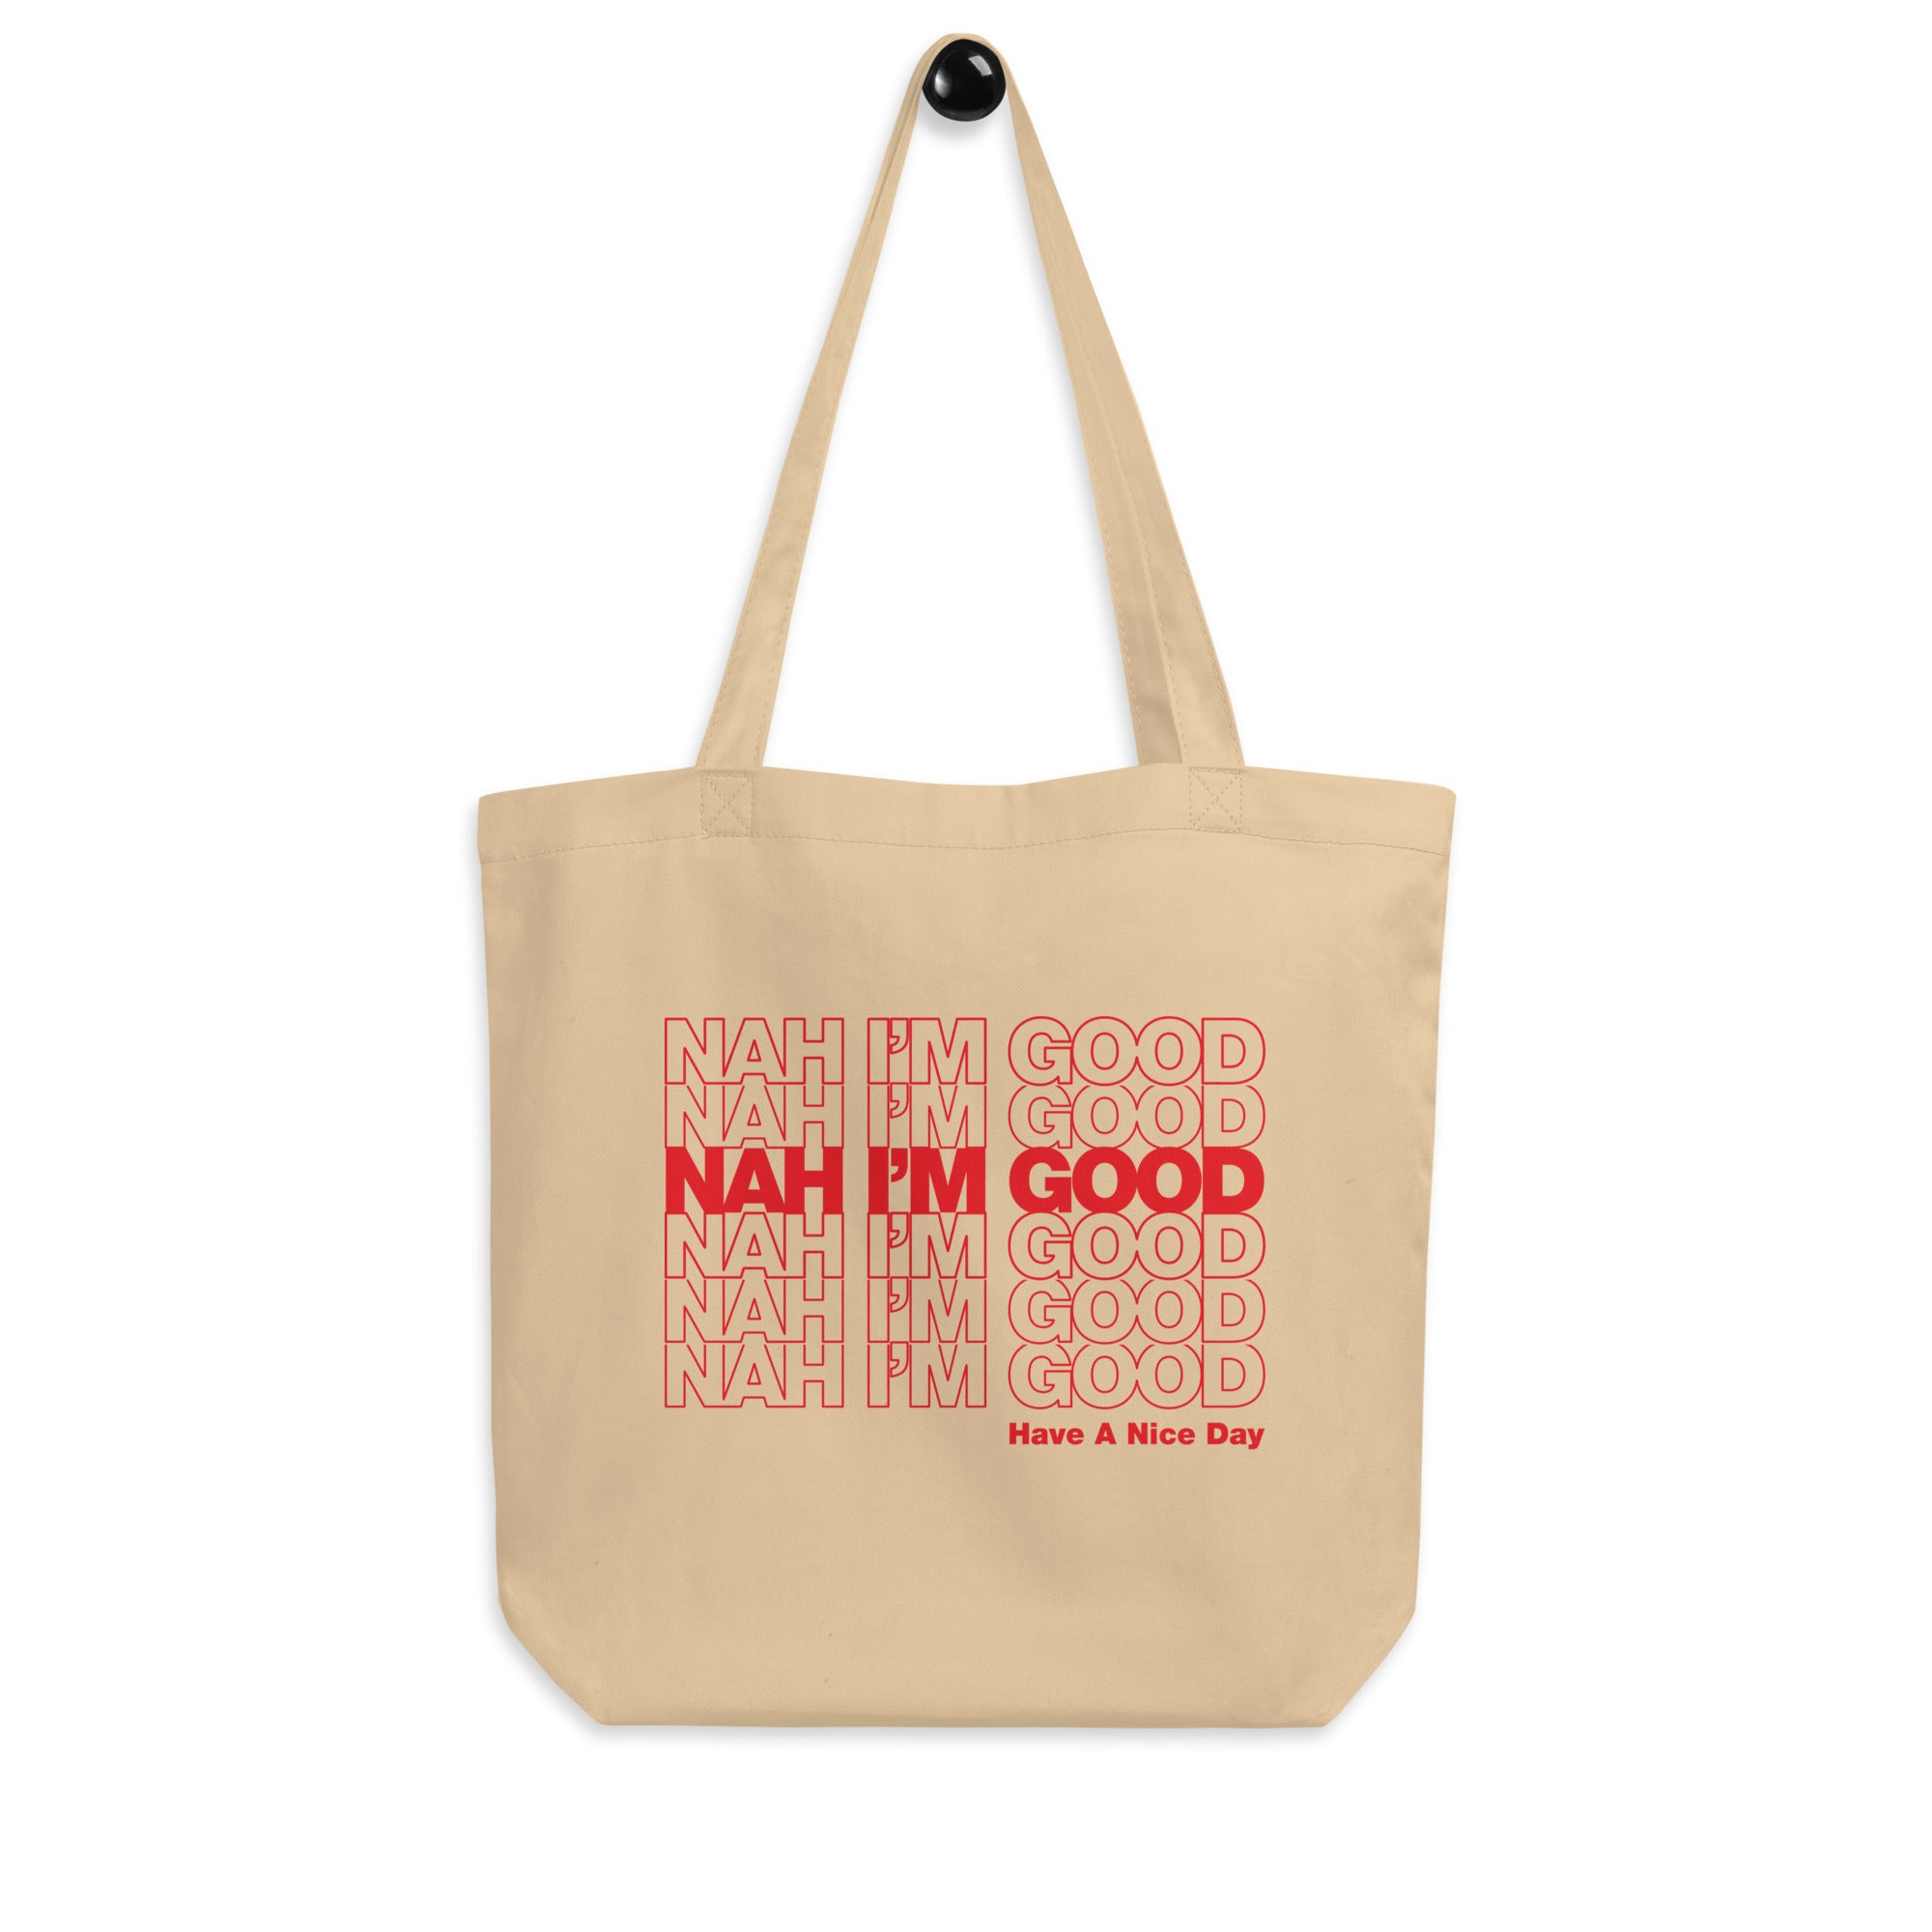 Nah I'm Good - Organic Eco Tote Bag